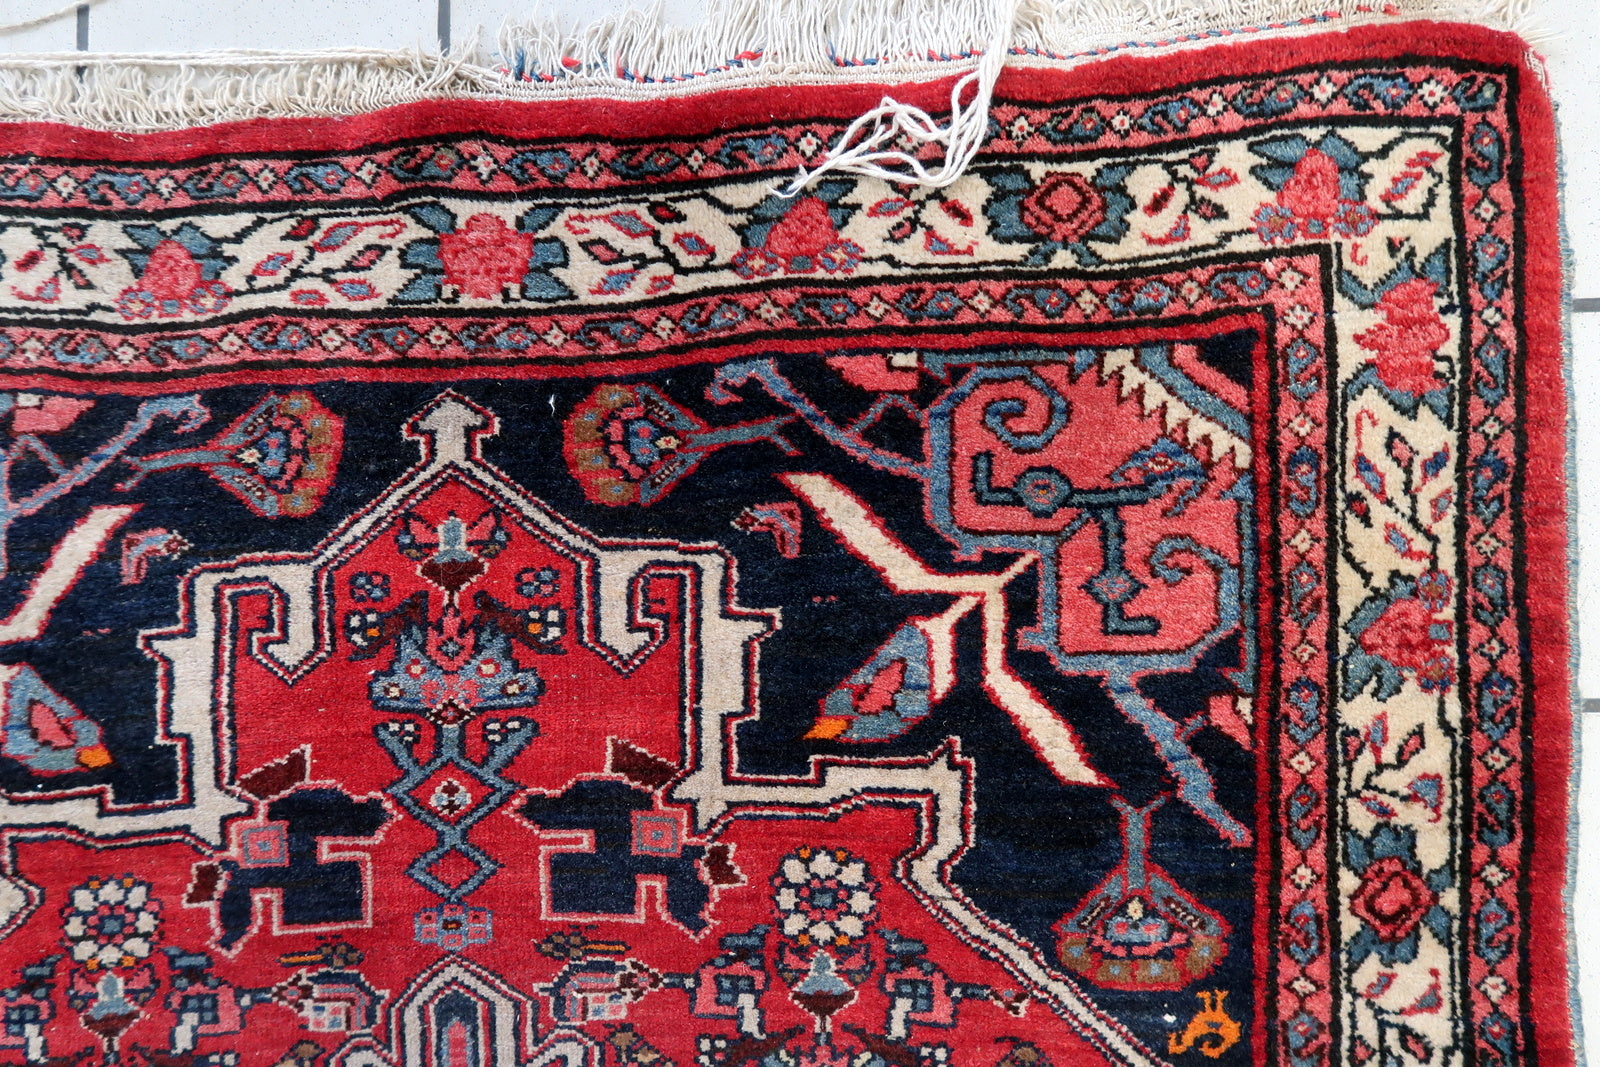 Close-up of dense weaving on Handmade Vintage Persian Bidjar Rug - Detailed view highlighting the dense weaving contributing to the rug's plush texture.